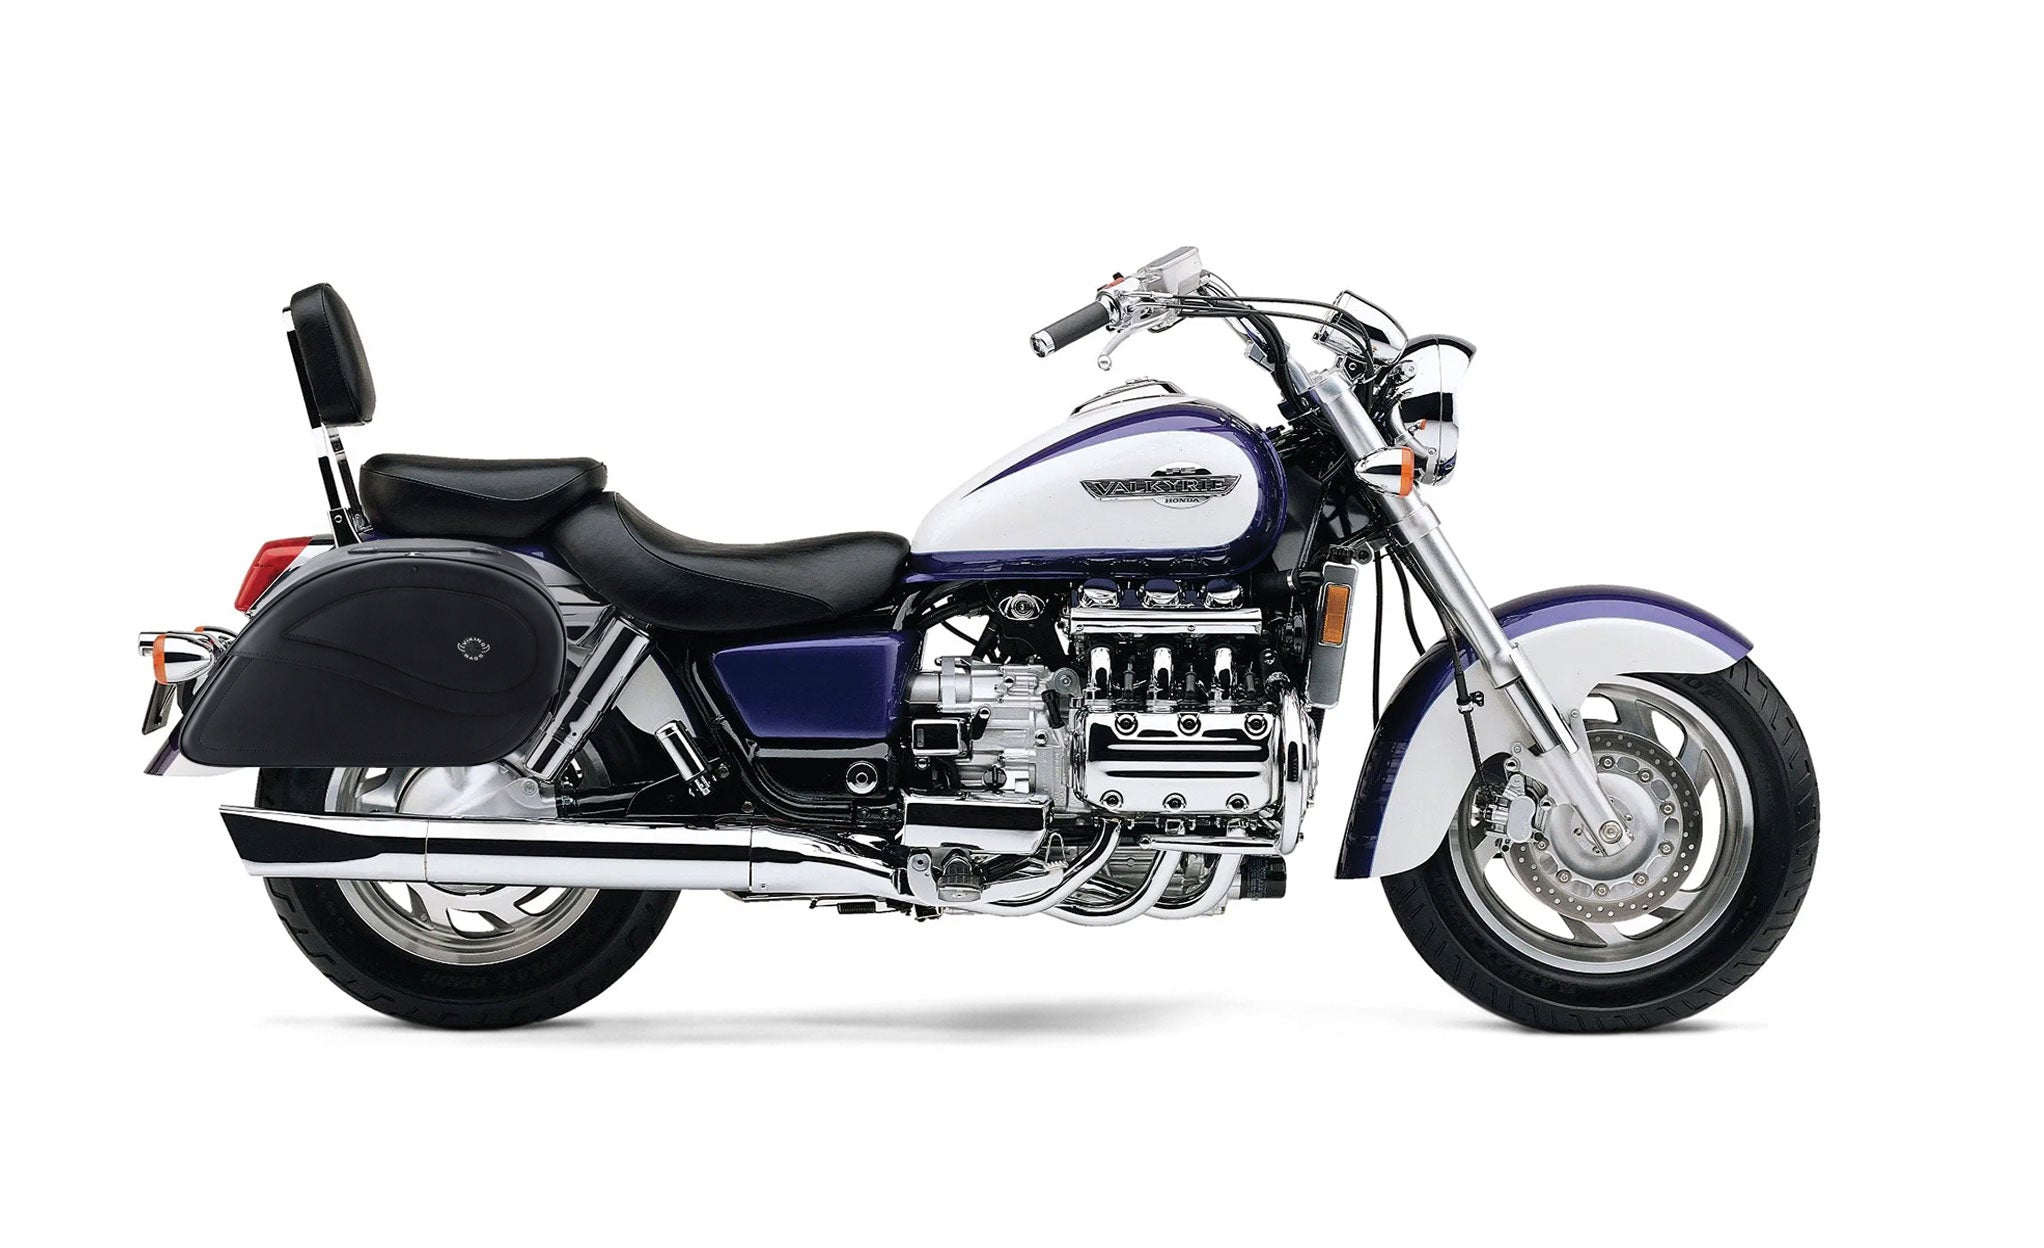 Viking Ultimate Large Honda Valkyrie 1500 Interstate Leather Motorcycle Saddlebags on Bike Photo @expand